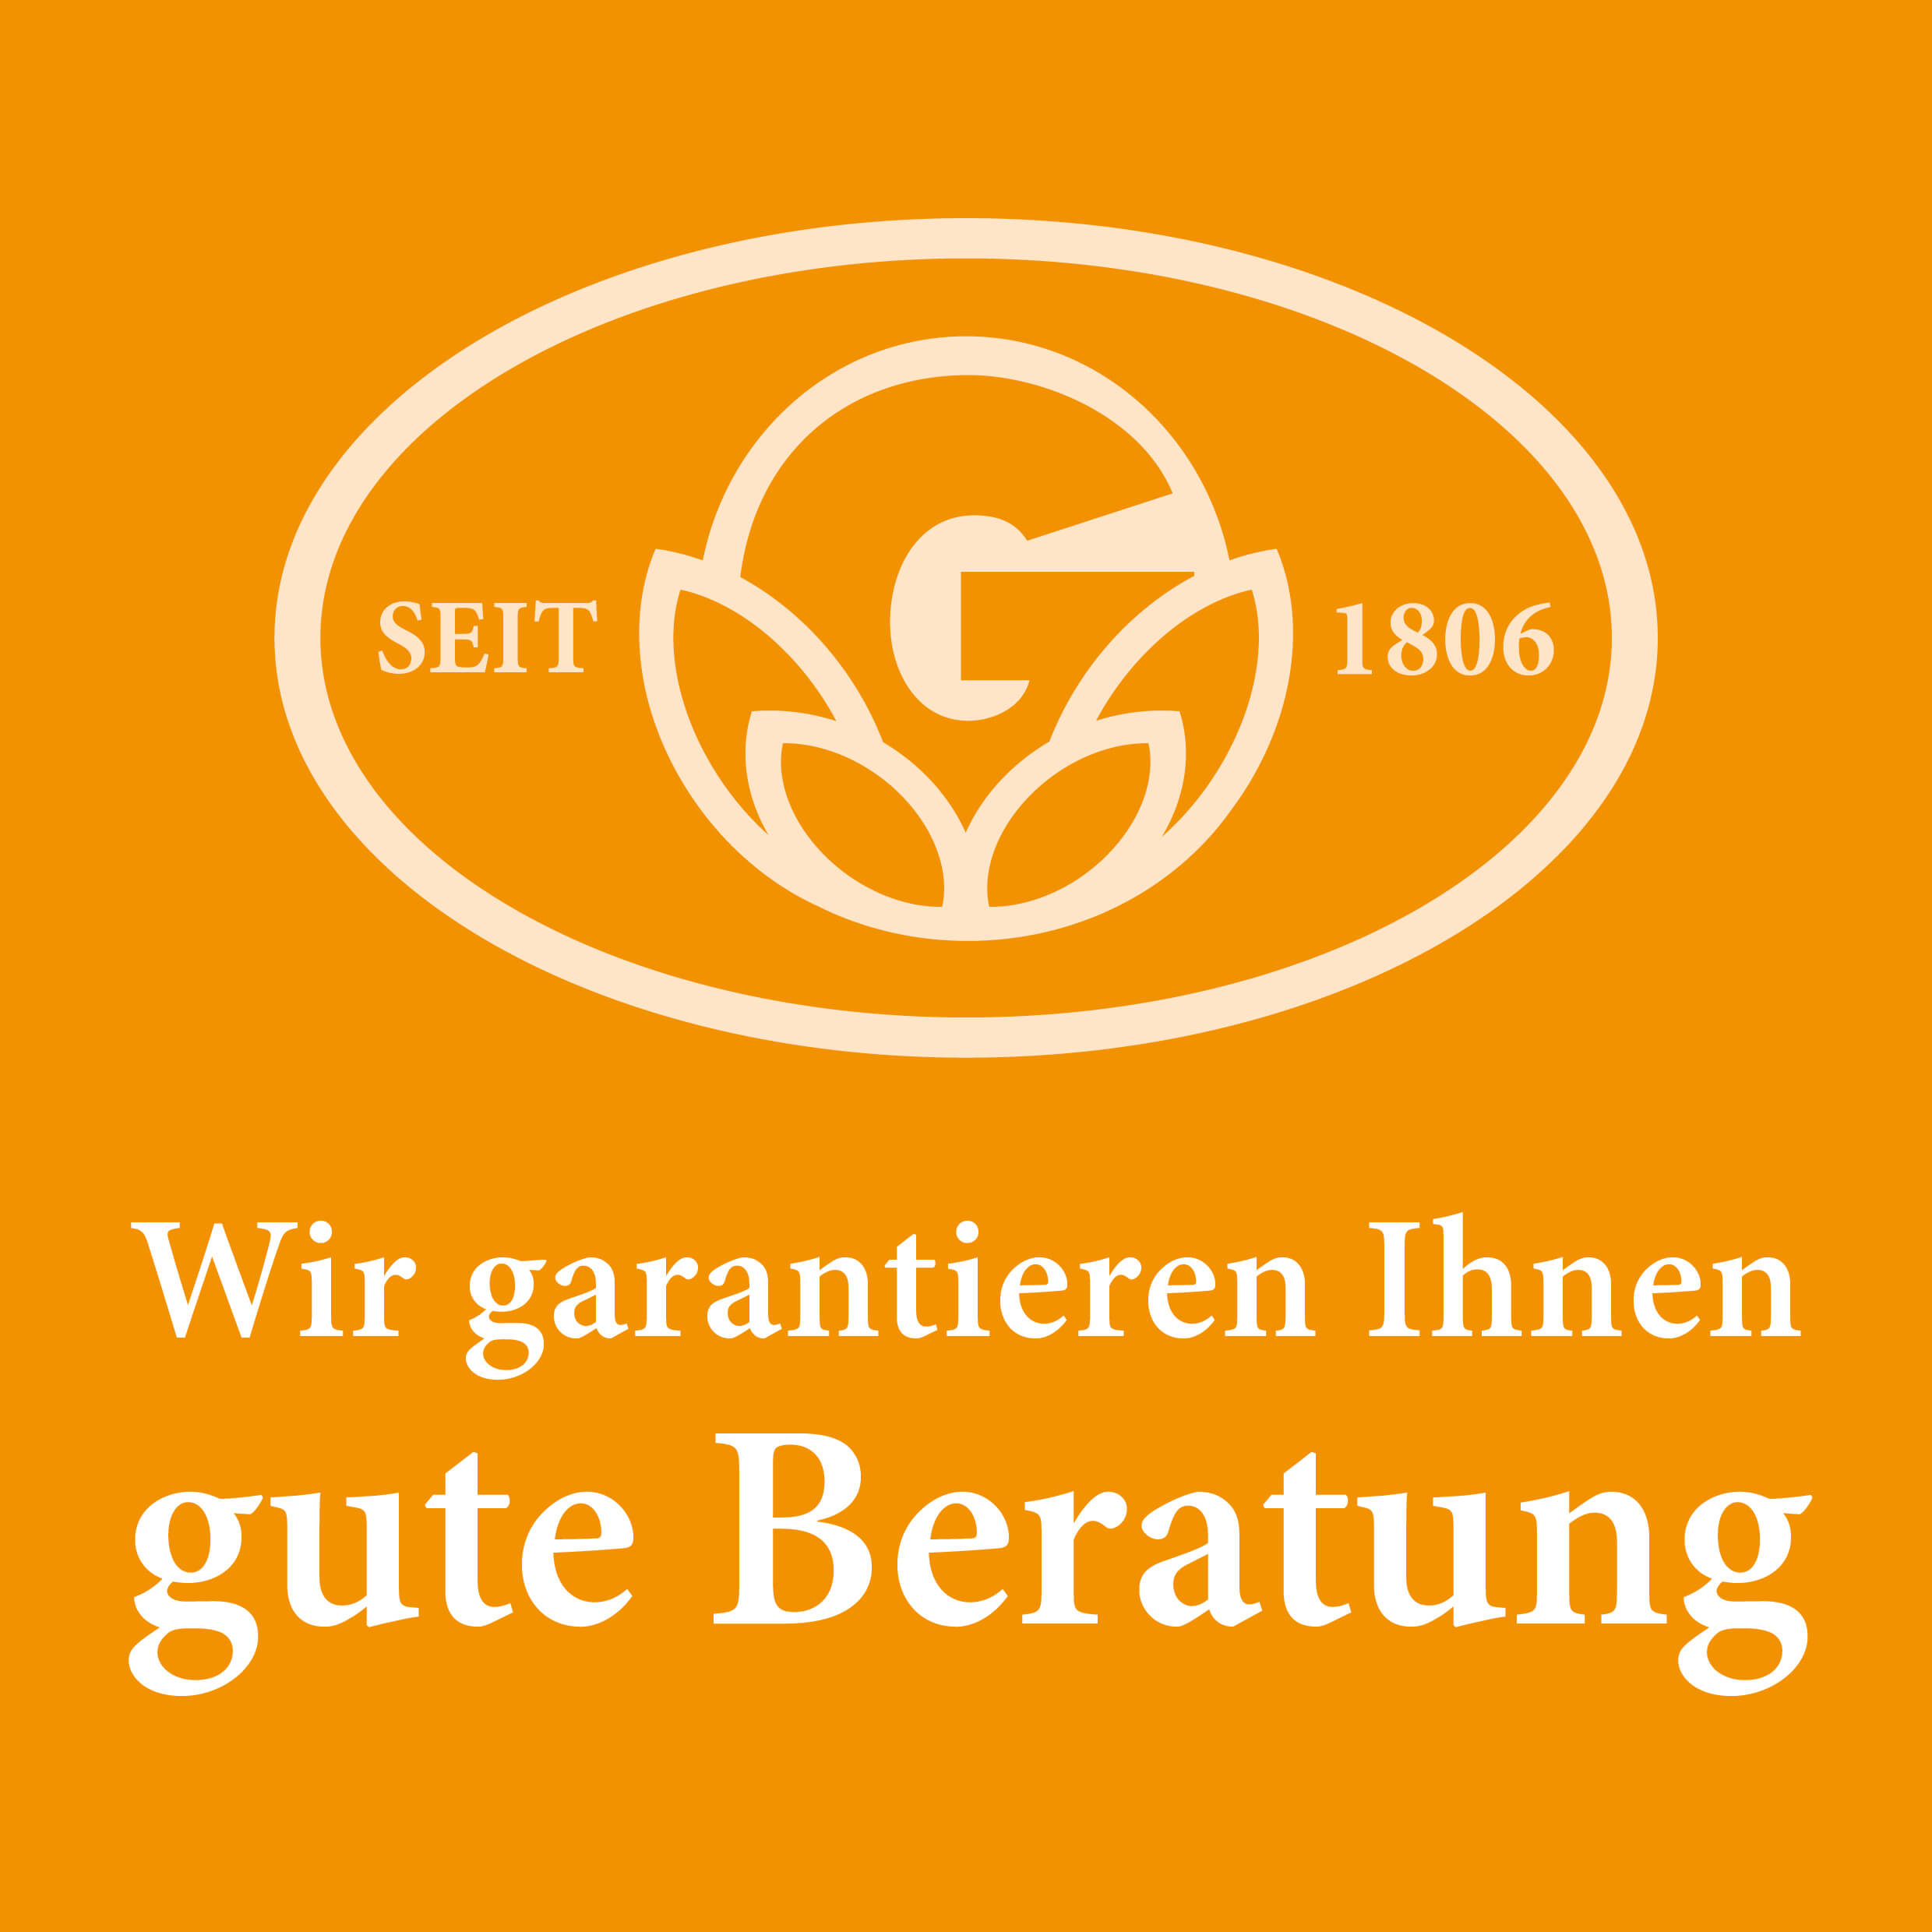 3 Gartenbaugruppe Logo Gute Beratung